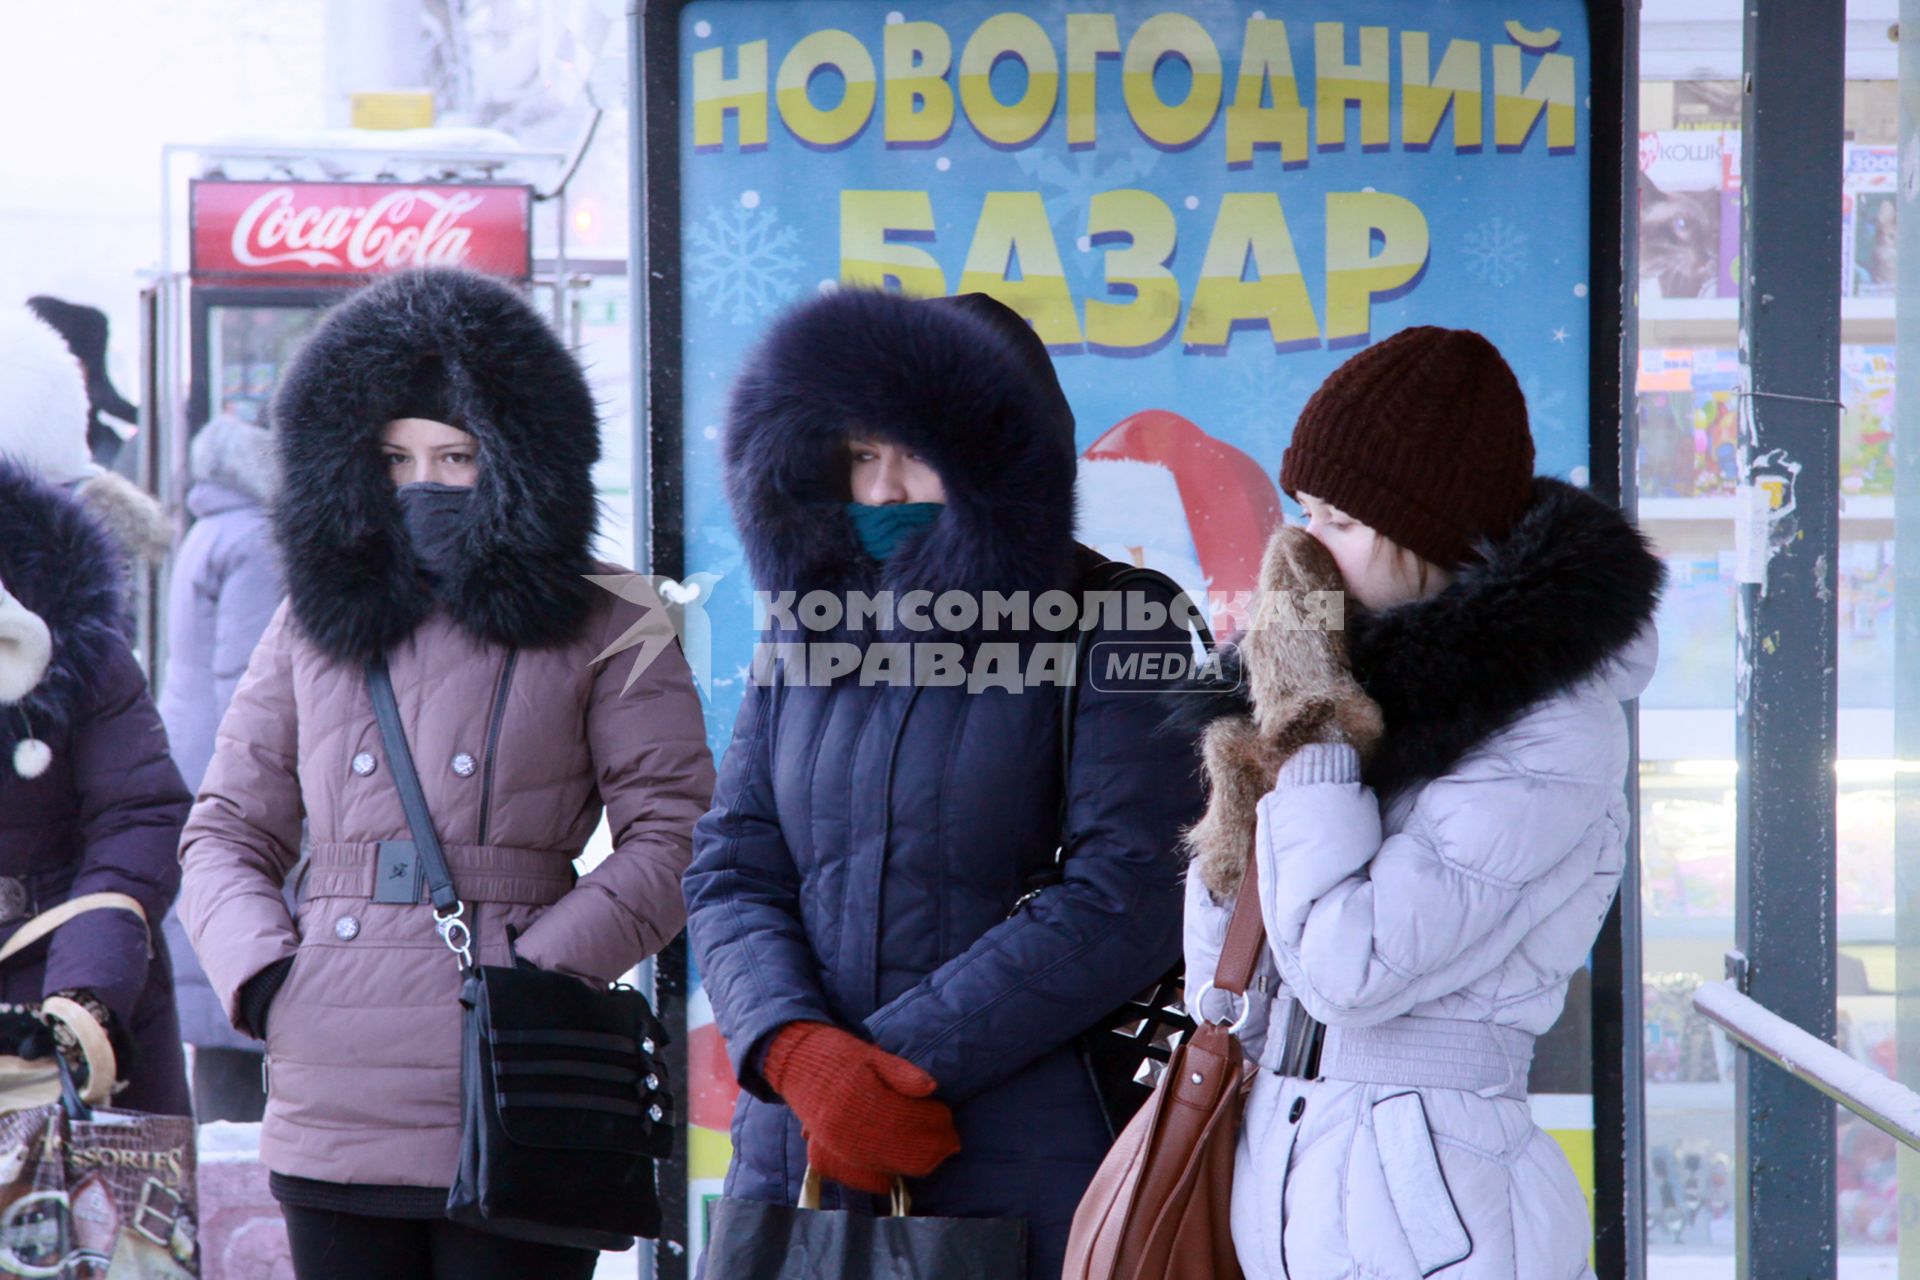 Барнаул. Девушки на улице  закрыли лица от холода.